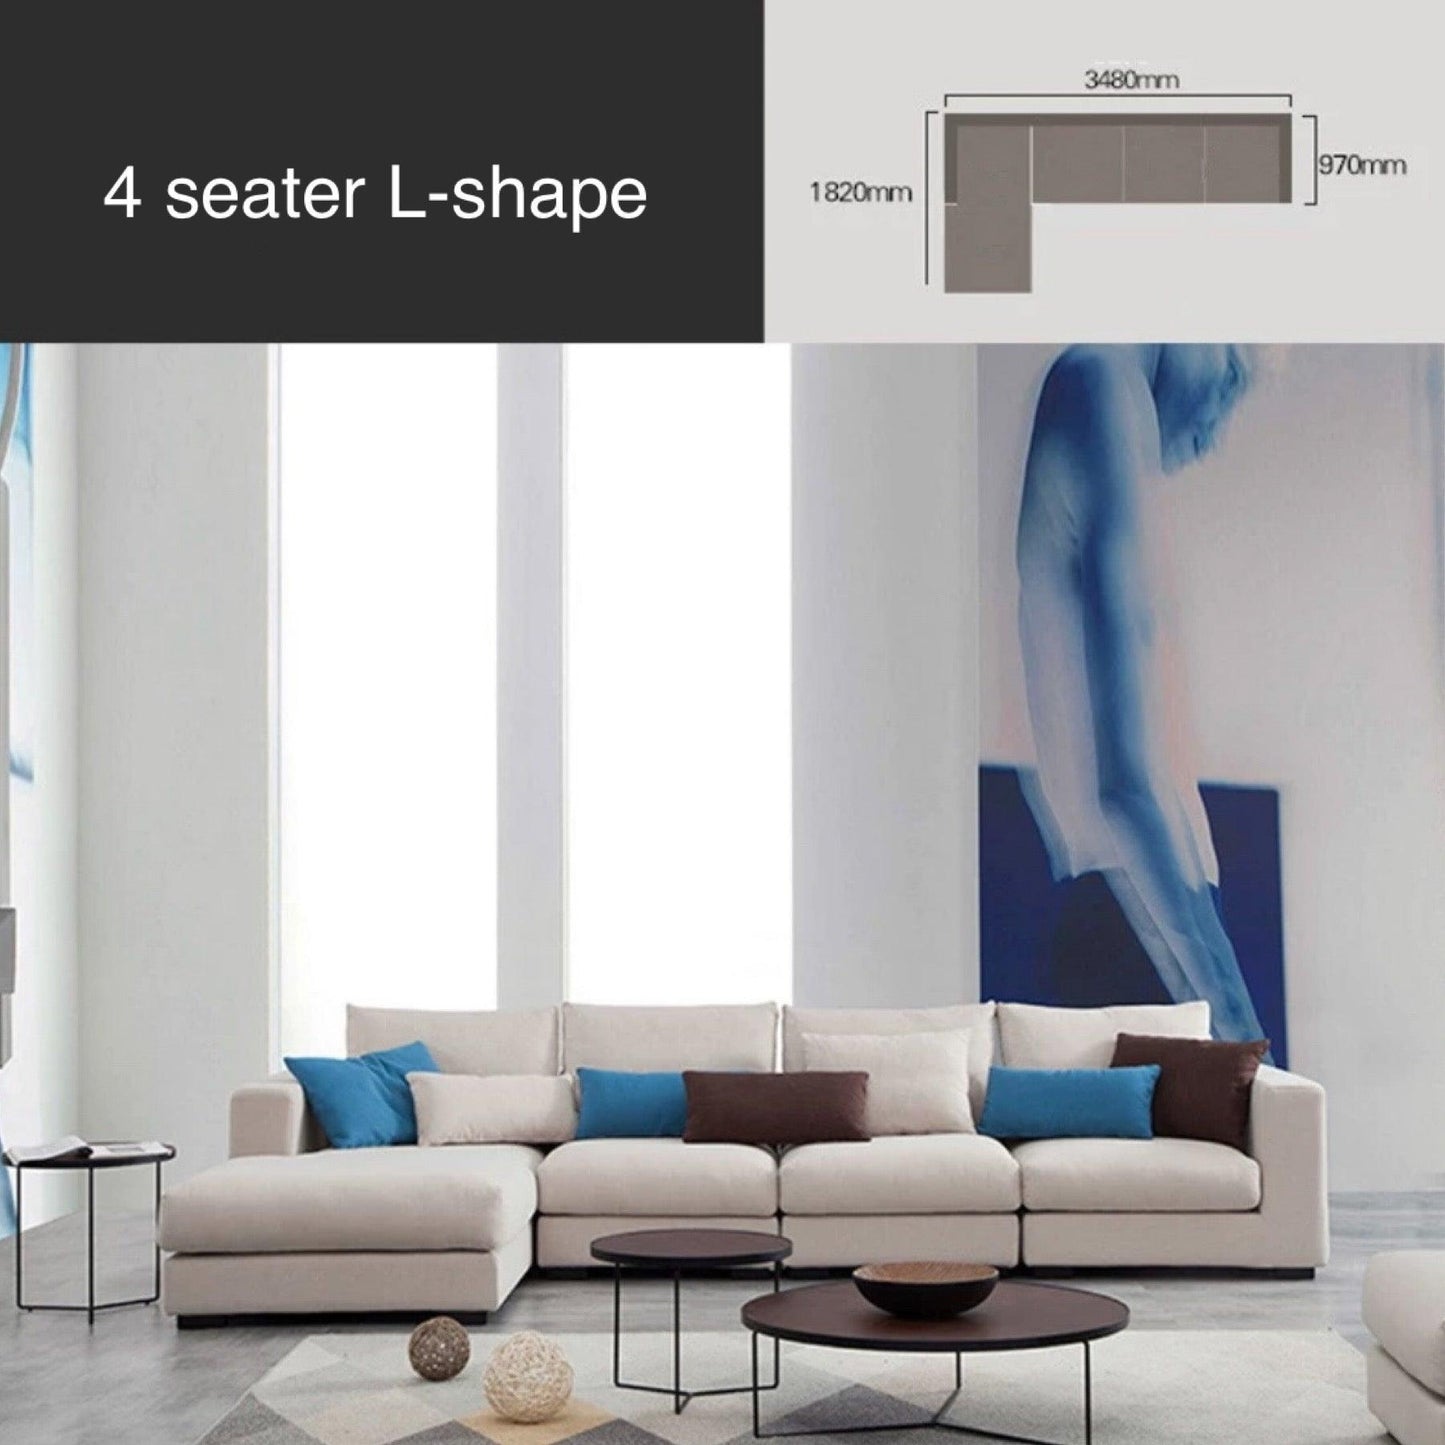 home-atelier-f31a Cotton Linen Fabric / 4 seater L-shape/ Length 348cm / Cream Bellini Sectional L-shape Corner Seat Sofa